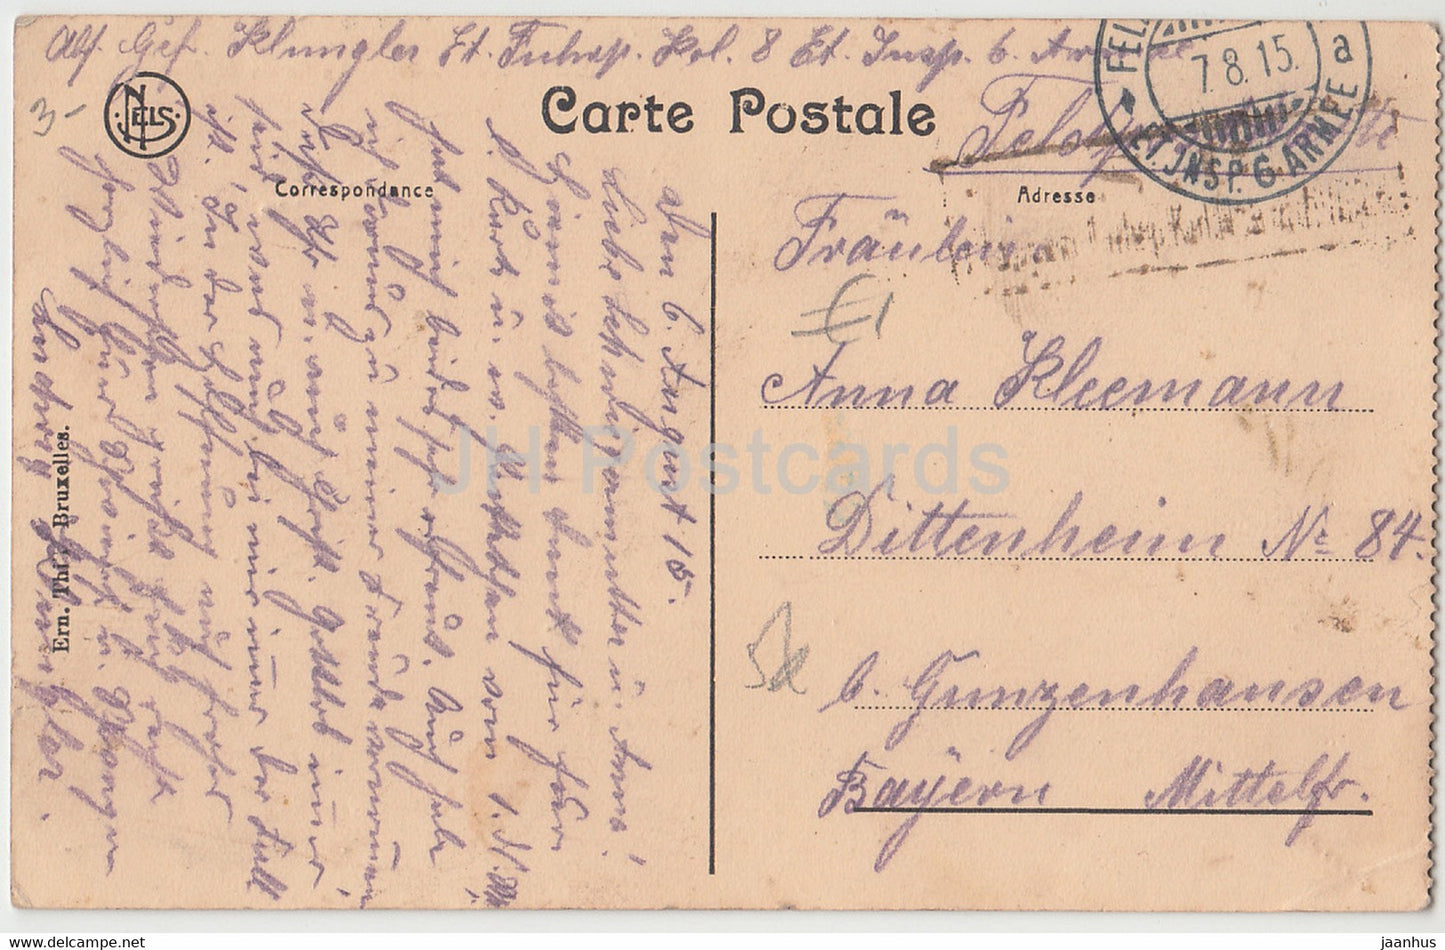 Saint Quentin - Le Palais de Justice - Feldpost - old postcard - 1915 - France - used